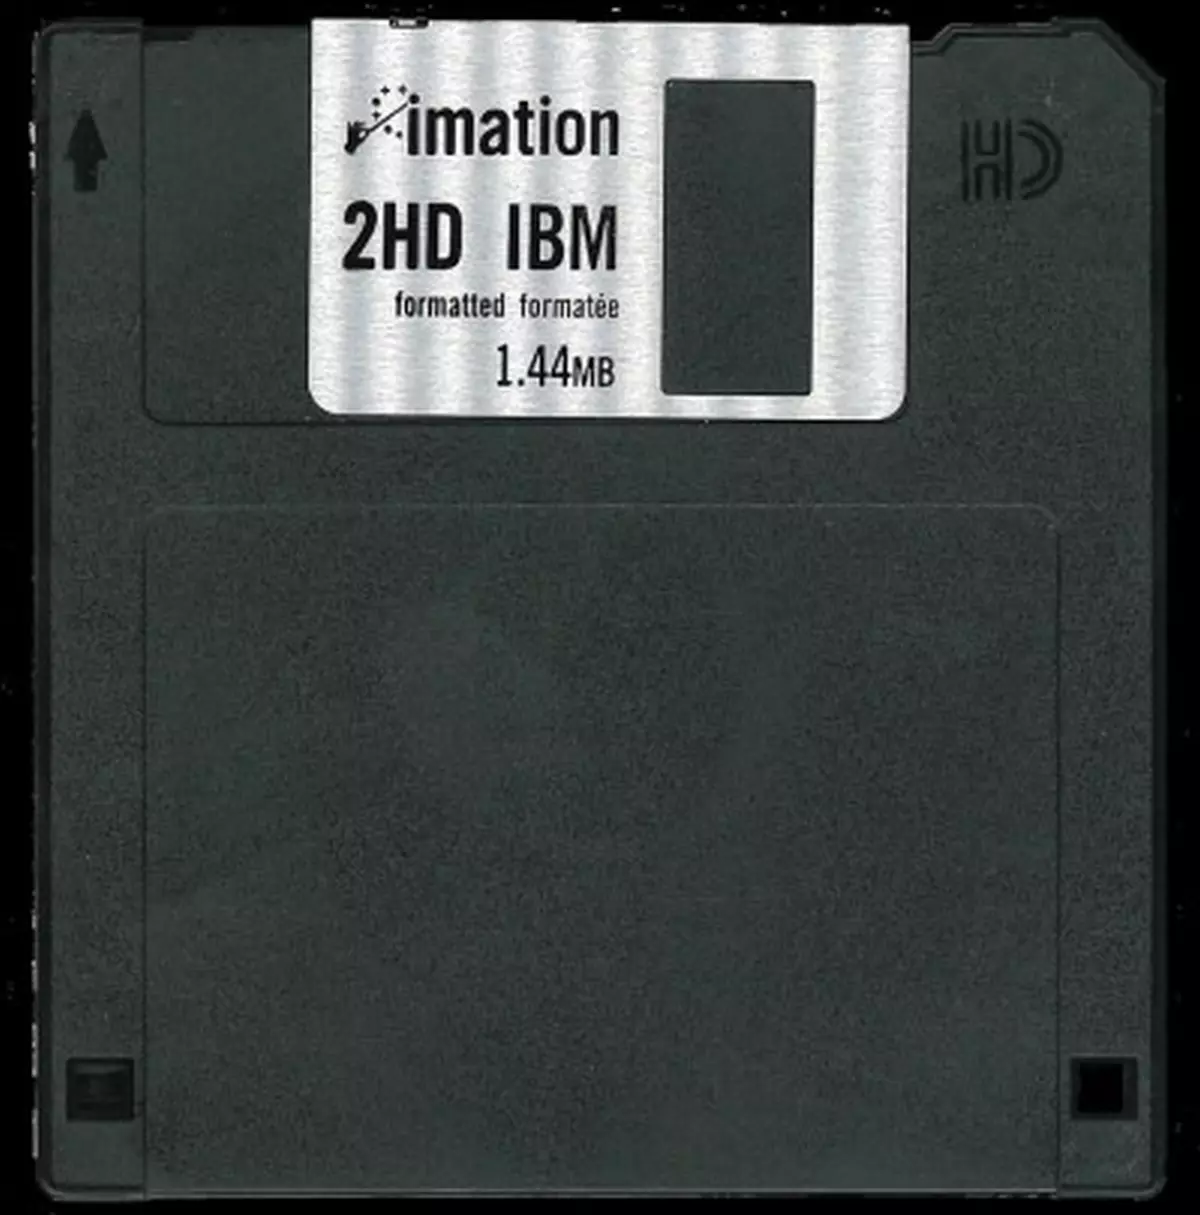 Definición de 3 1/2 (disquete de 3½ pulgadas)